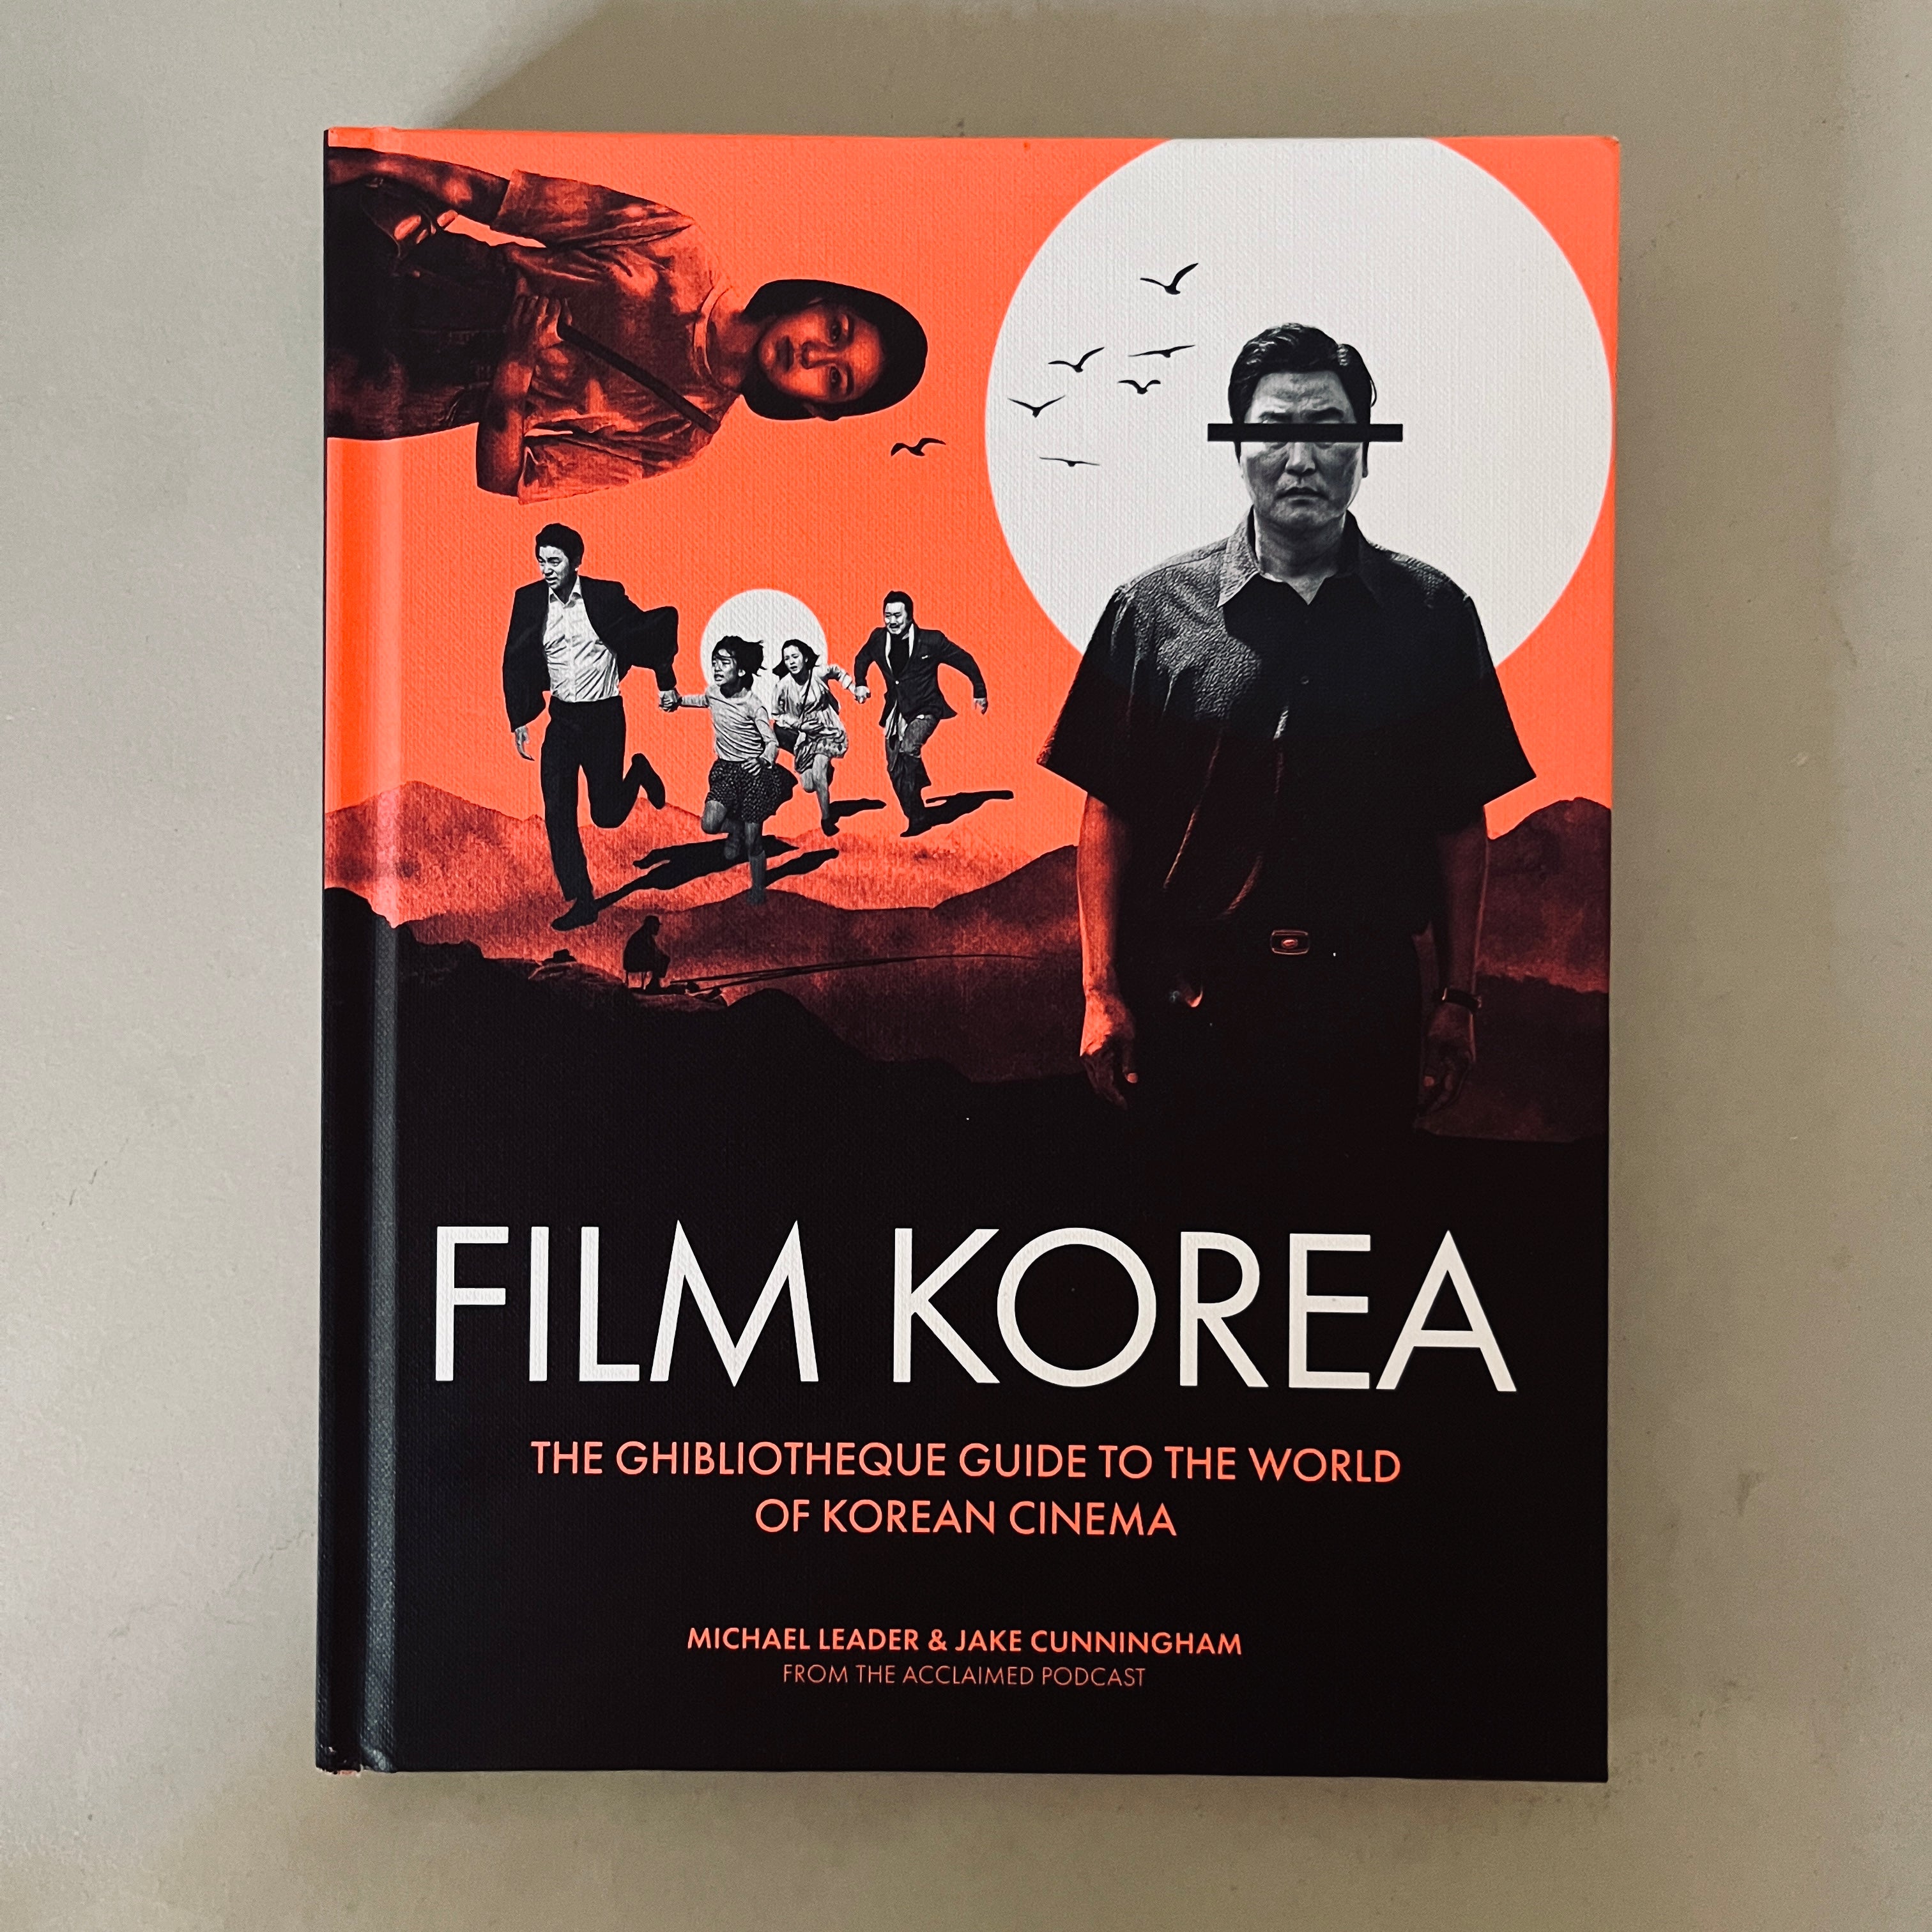 Ghibliotheque Film Korea by Jake Cunningham